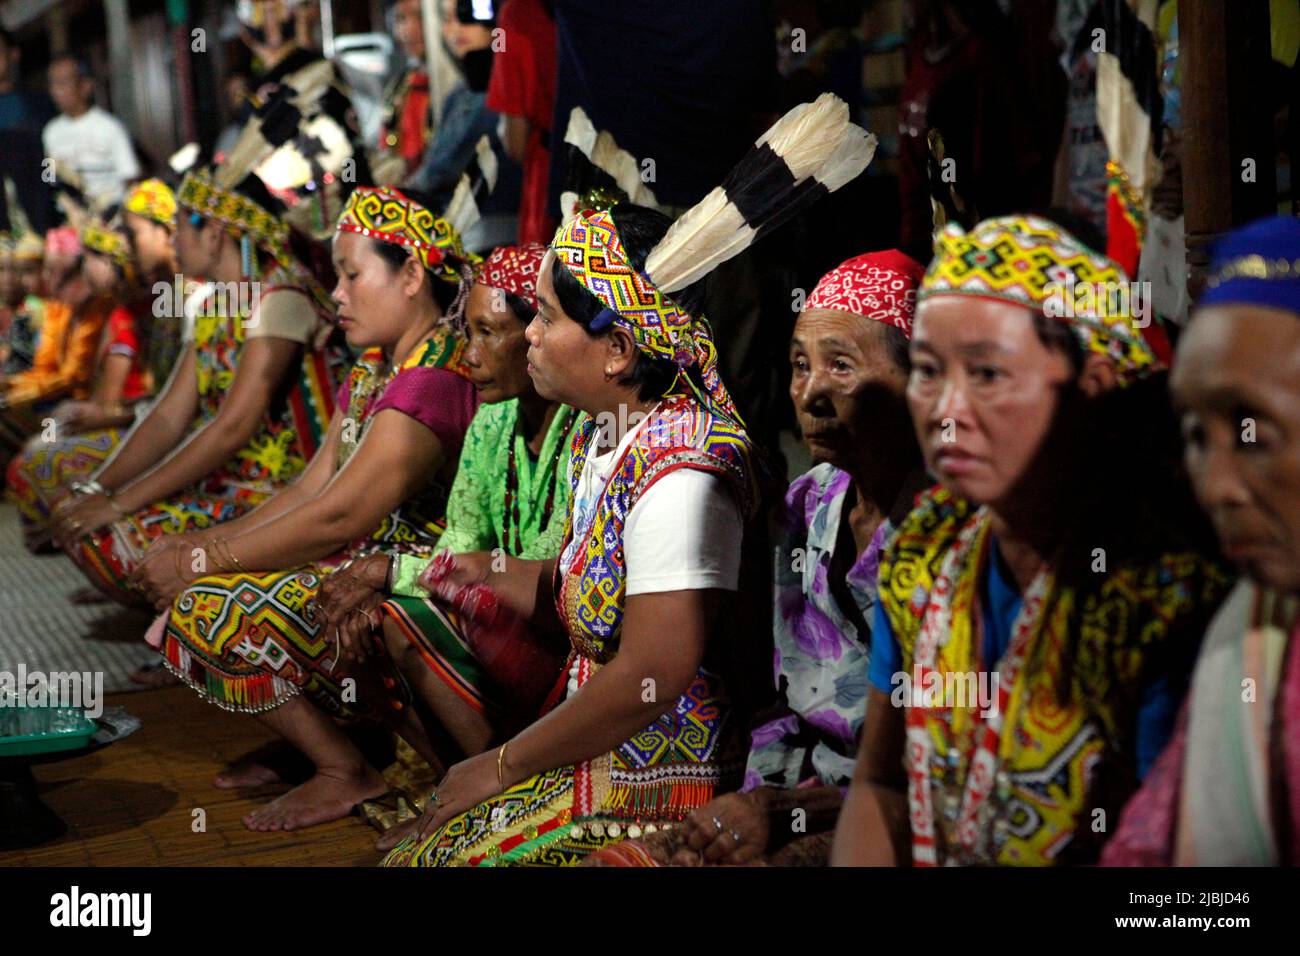 Women in traditional attire sitting for a welcome ceremony during an ecotourism event at Bali Gundi longhouse of traditional Dayak Taman community in Sibau Hulu, Putussibau Utara, Kapuas Hulu, West Kalimantan, Indonesia. Stock Photo